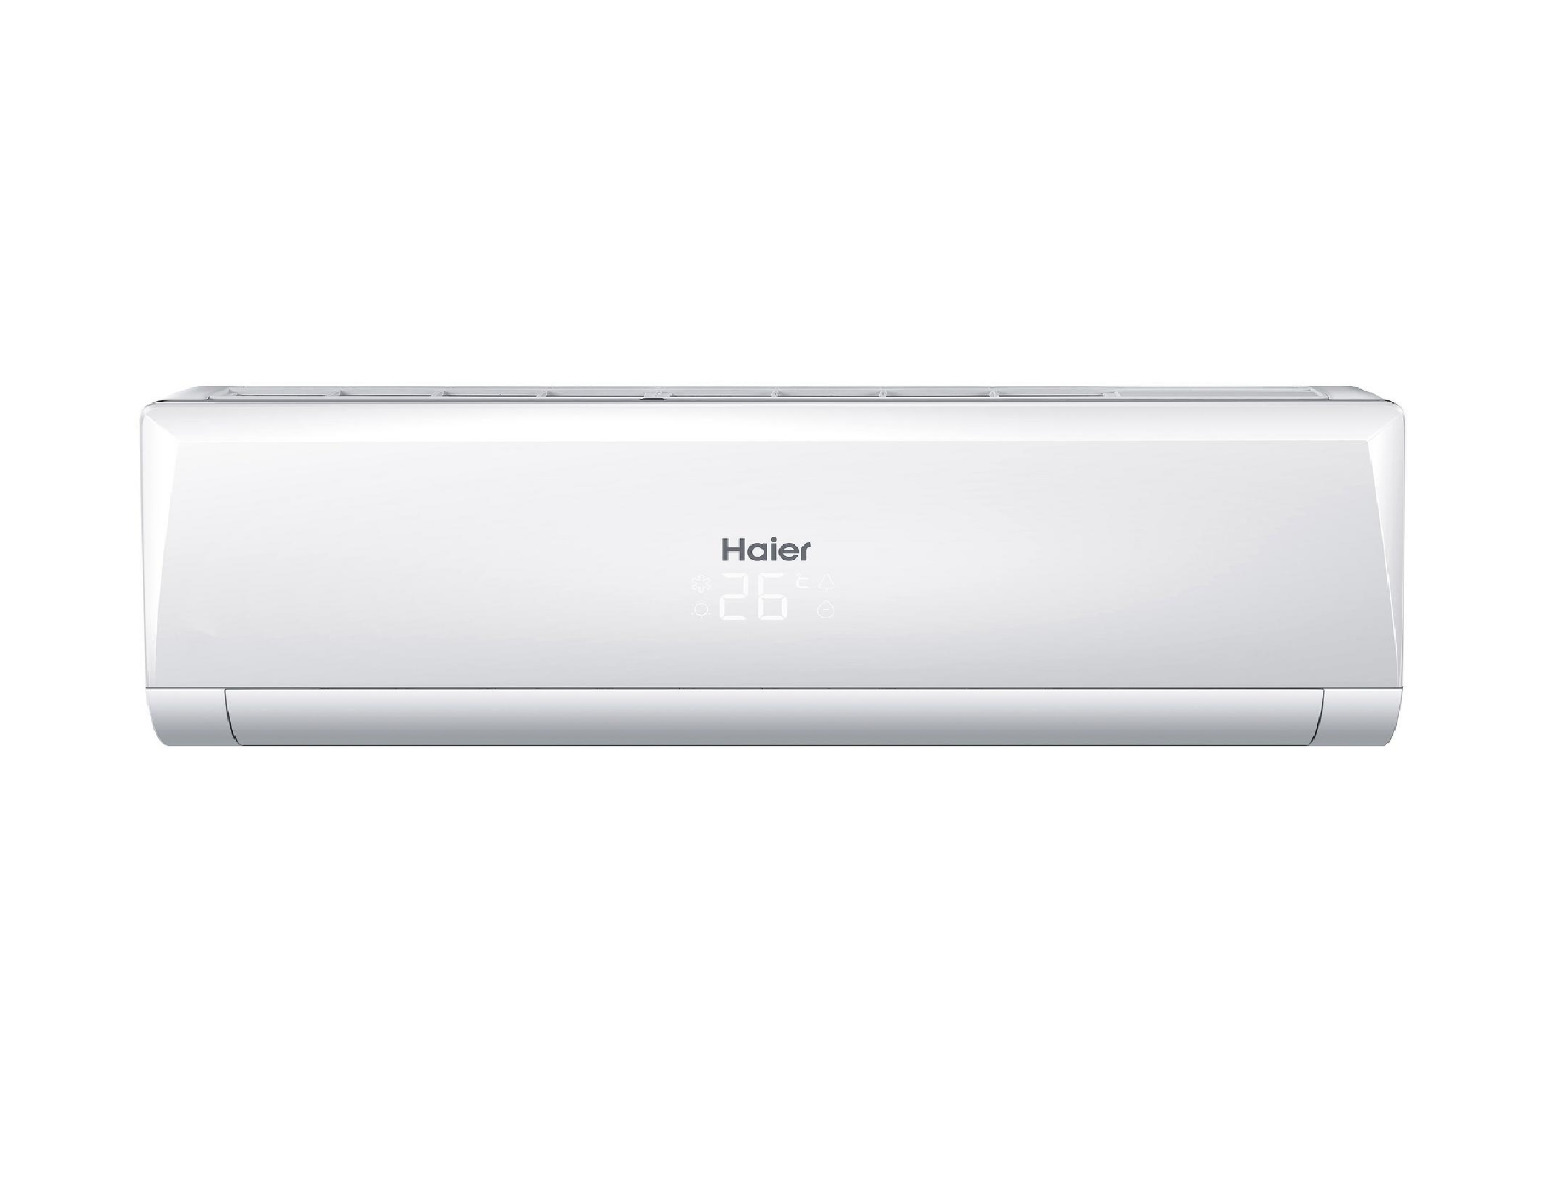  Haier Split  Air Conditioner 22000BTU,  Hot/Cool, Energy saver,Freon410, White -HSU-24HNX13/R2-T3 